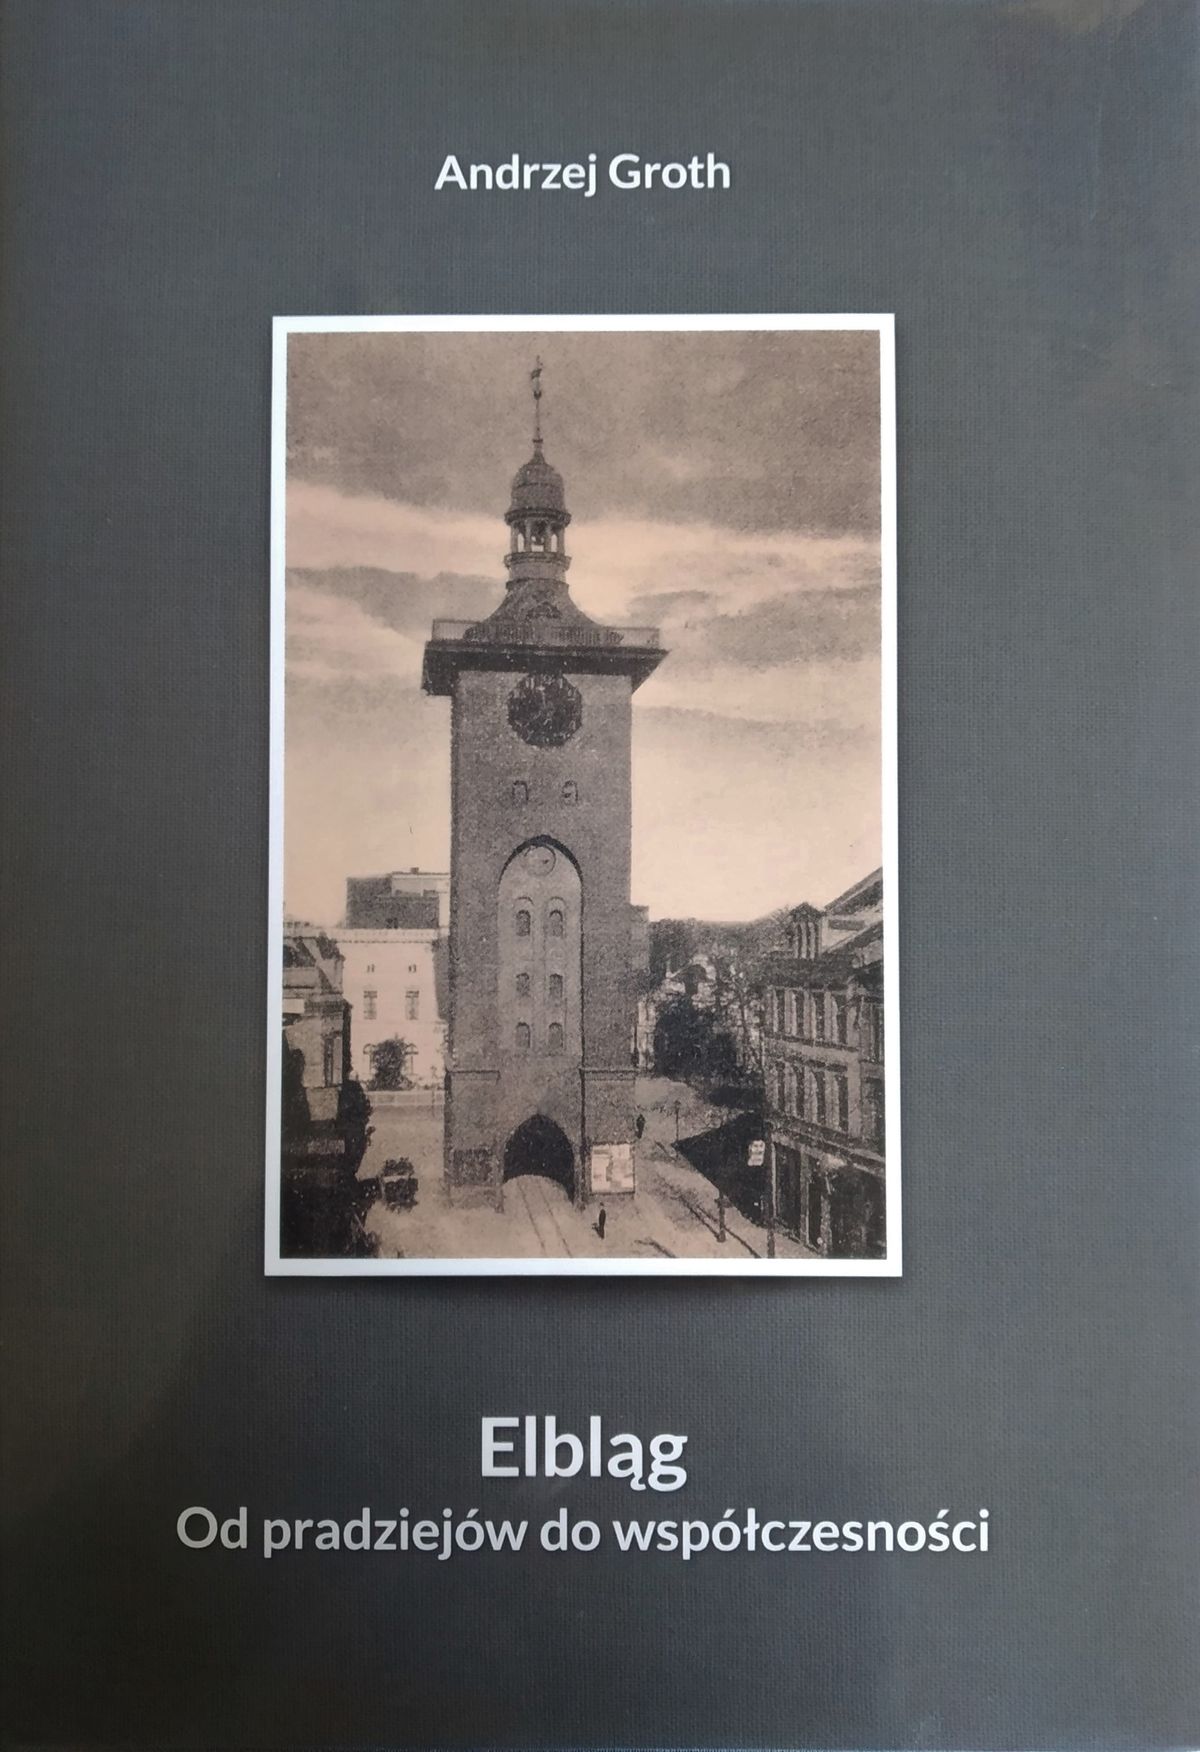 Monografia opisuje historię Elbląga od średniowiecza do 2015 roku